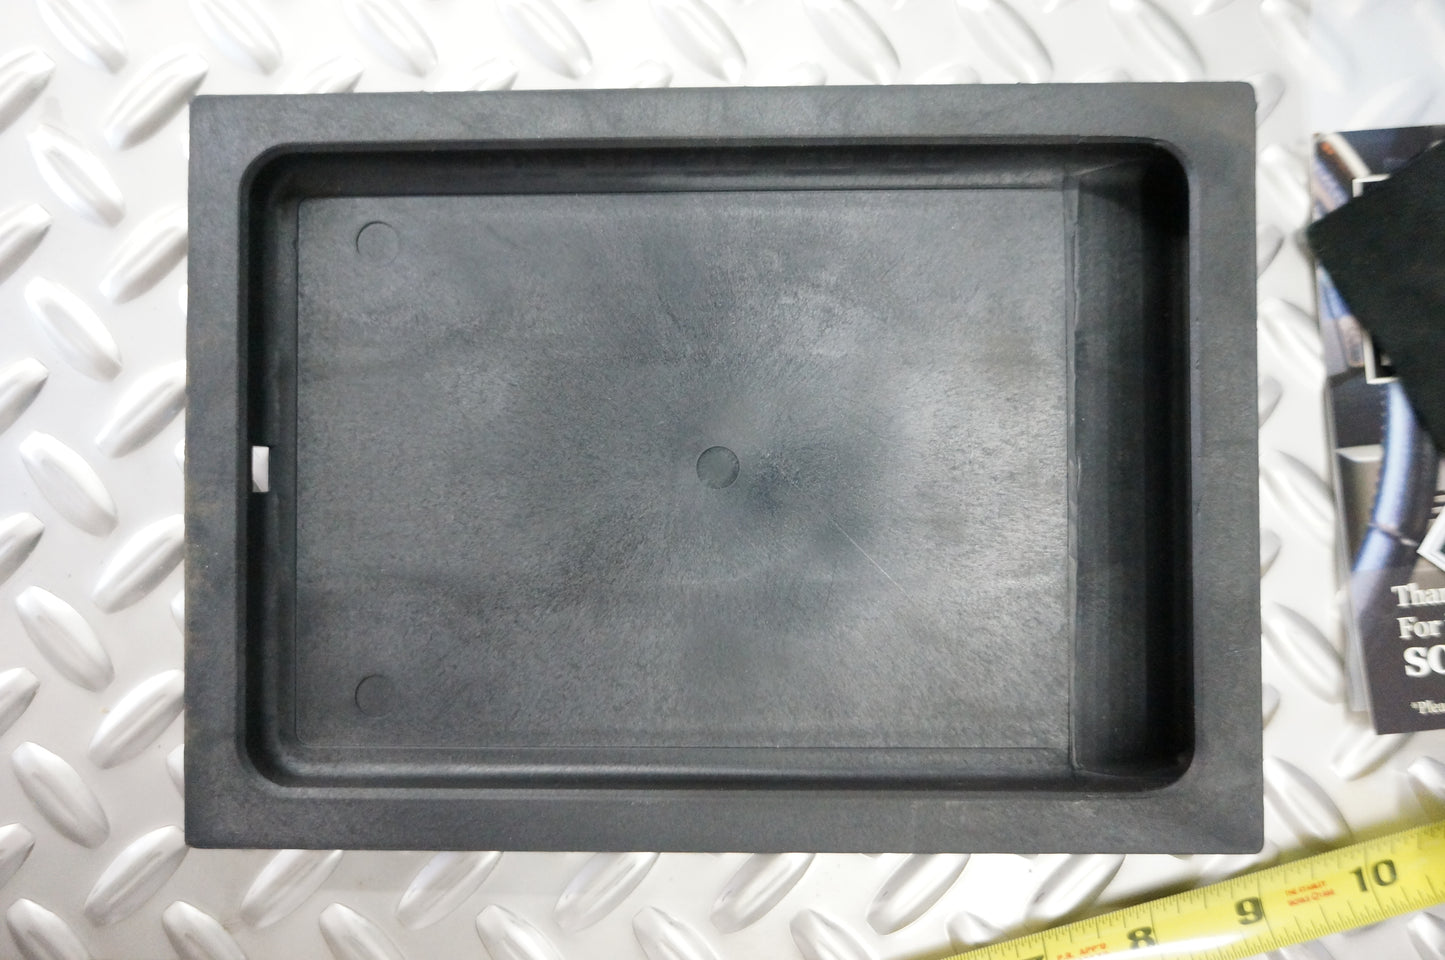 Soundman SIDE SLIDER iPad CAR dash kit for iPad mini 1 to 5